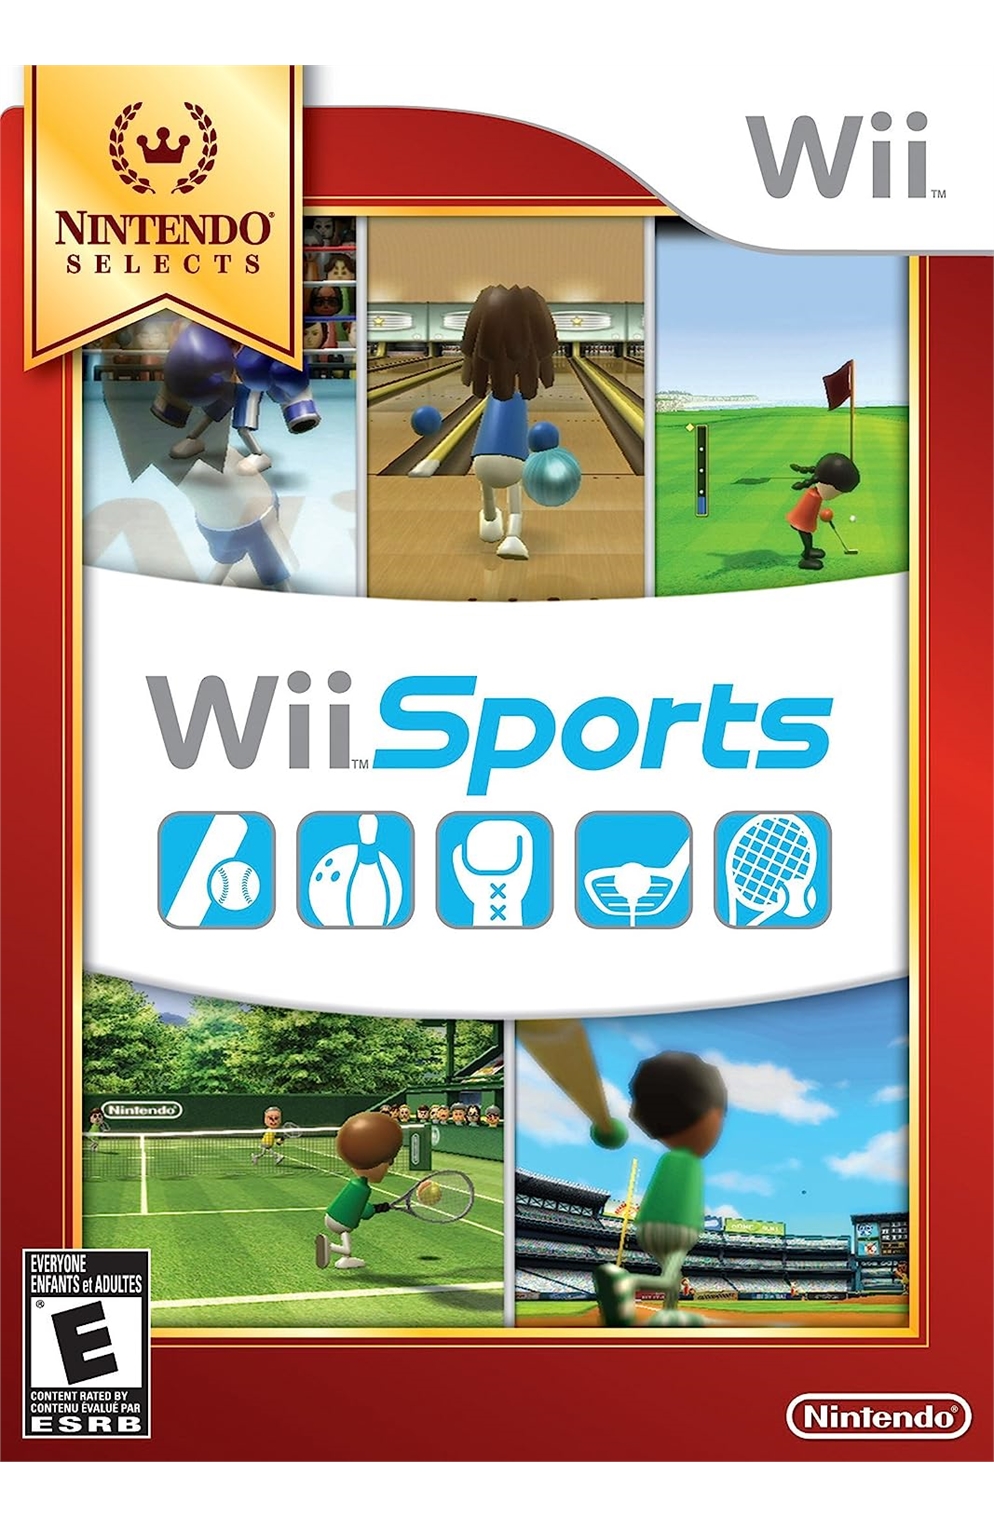 Nintendo Wii Wii Sports